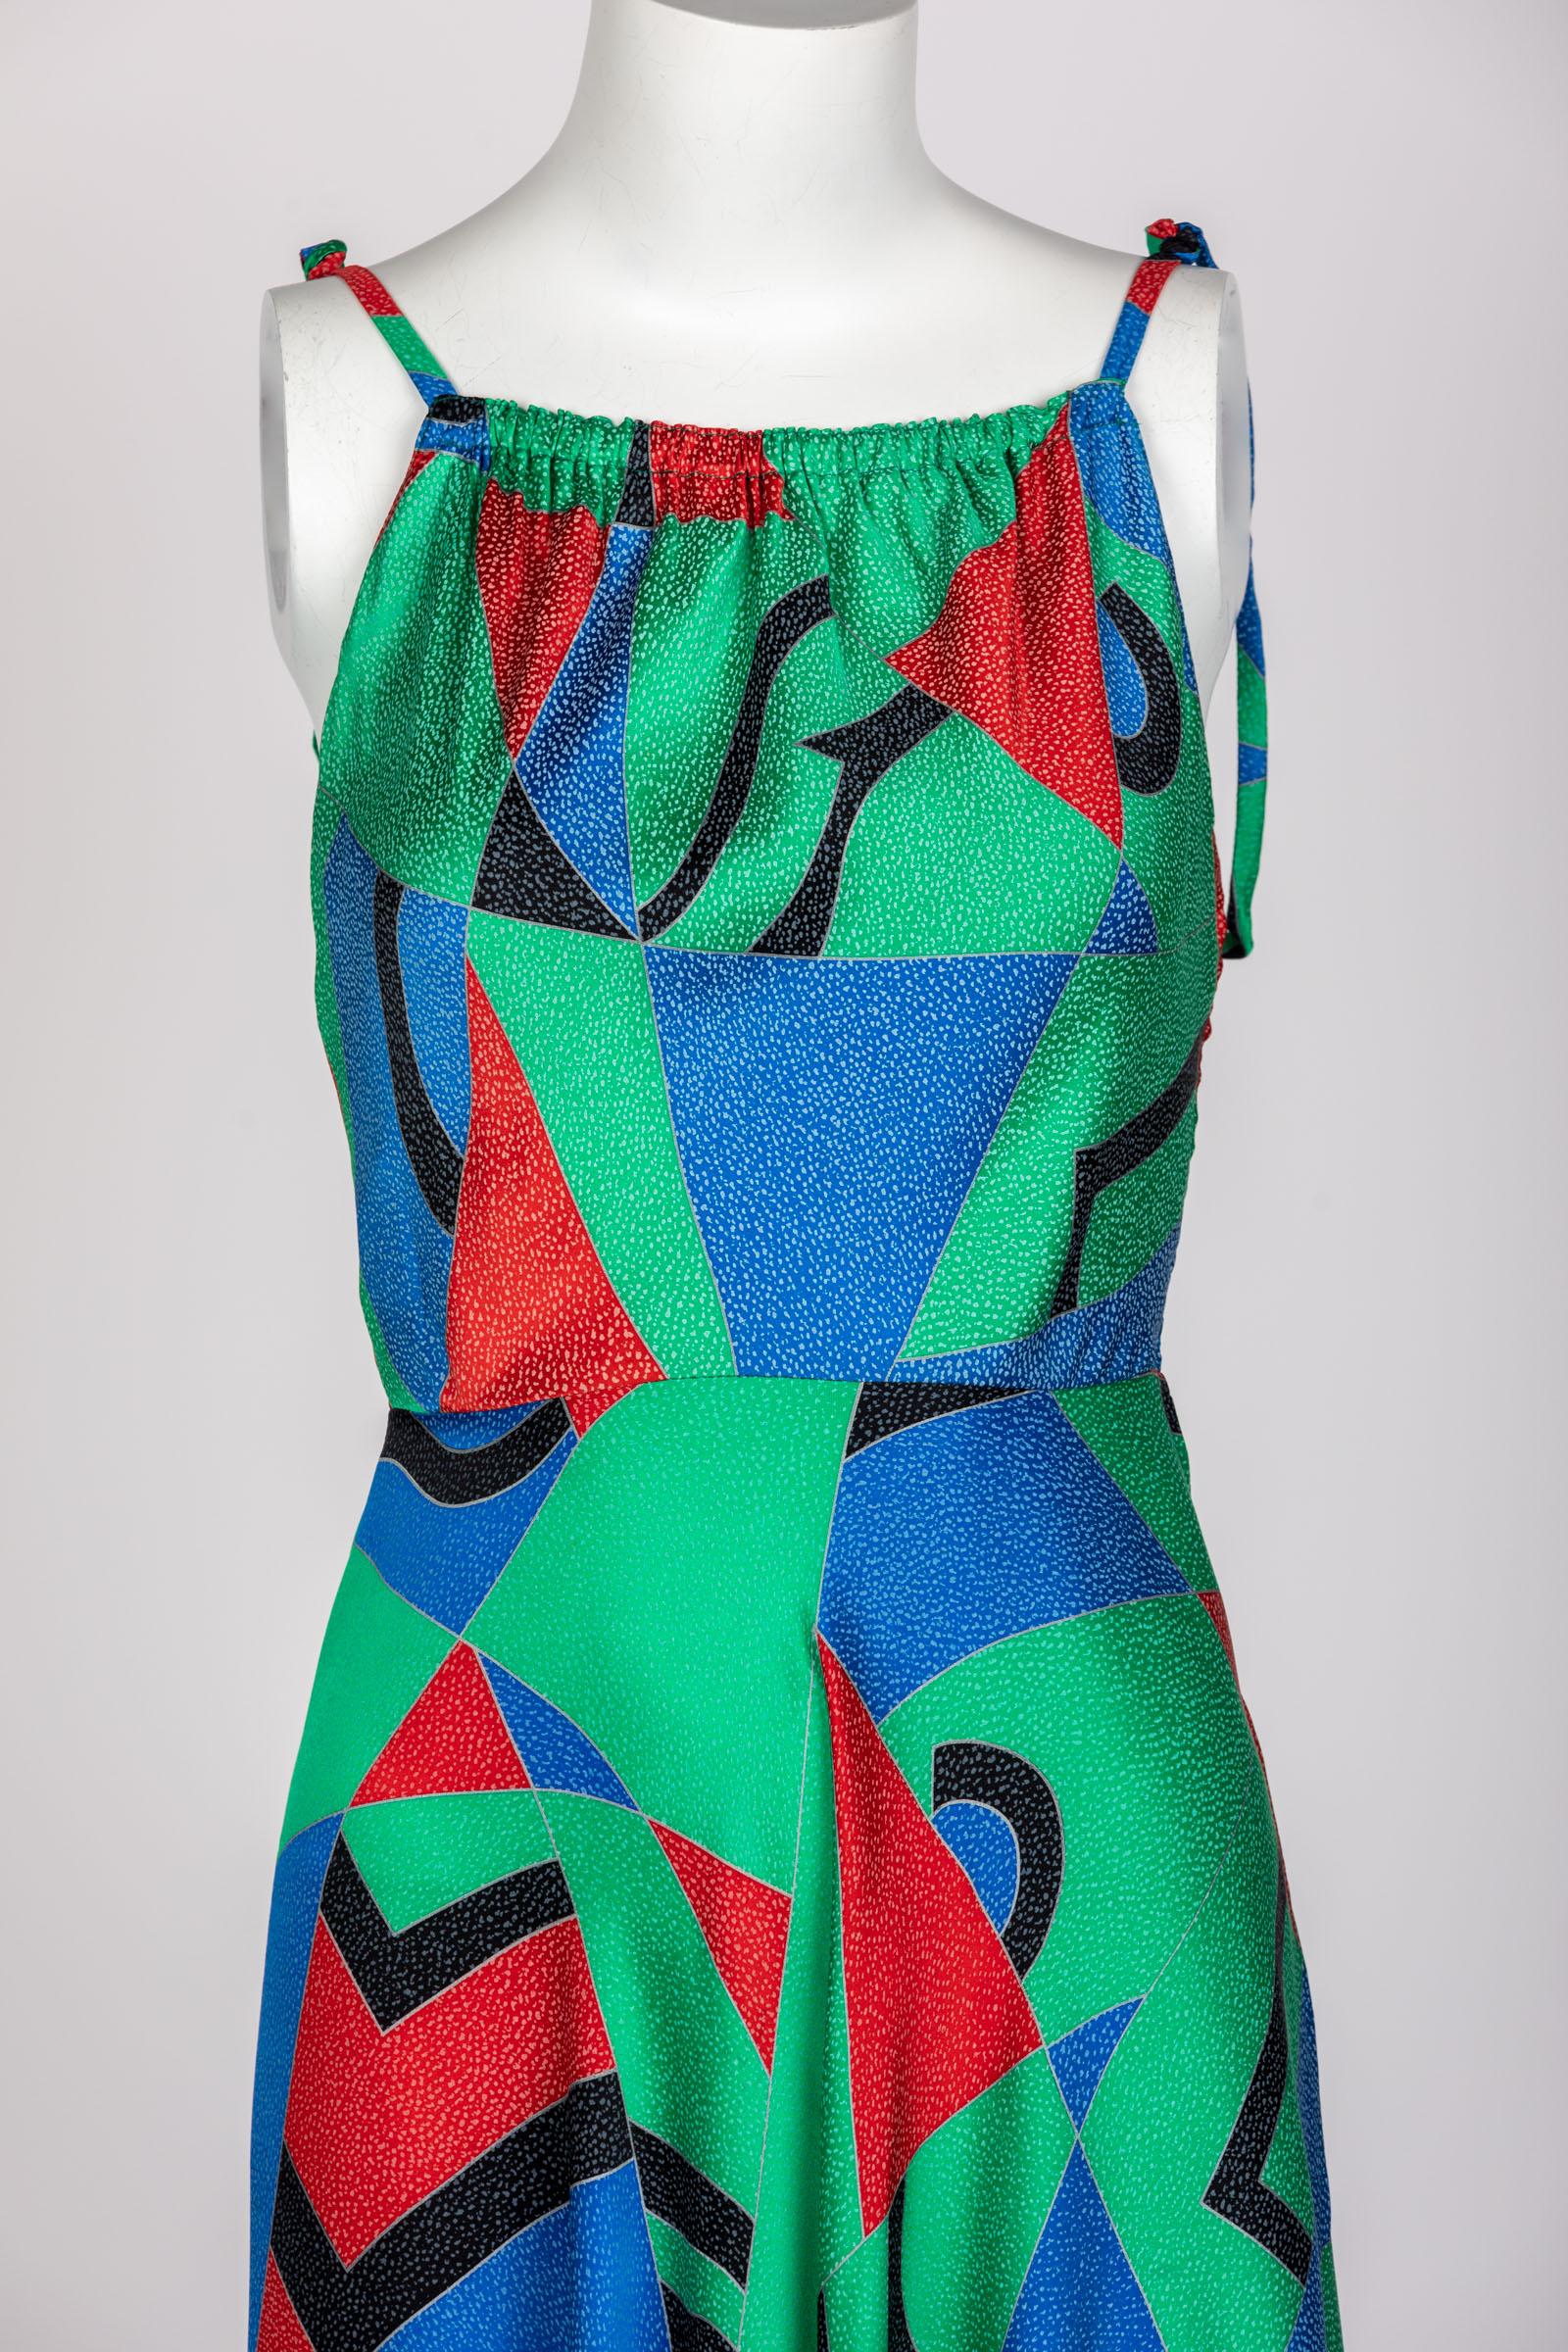 Chloe Karl Lagerfeld Cubist Green Silk Print Sleeveless Dress, 1970s For Sale 2